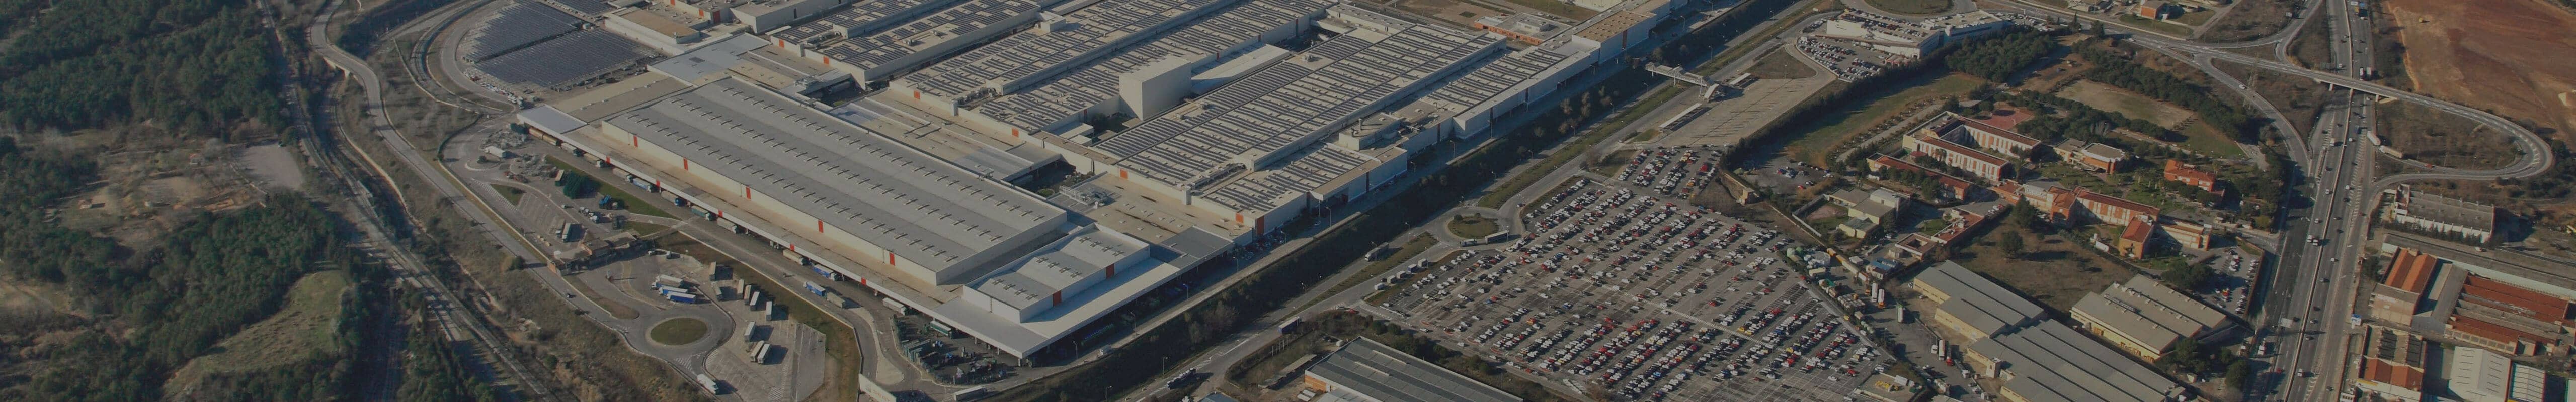 SEAT Ibiza manufacturing at Martorell factory